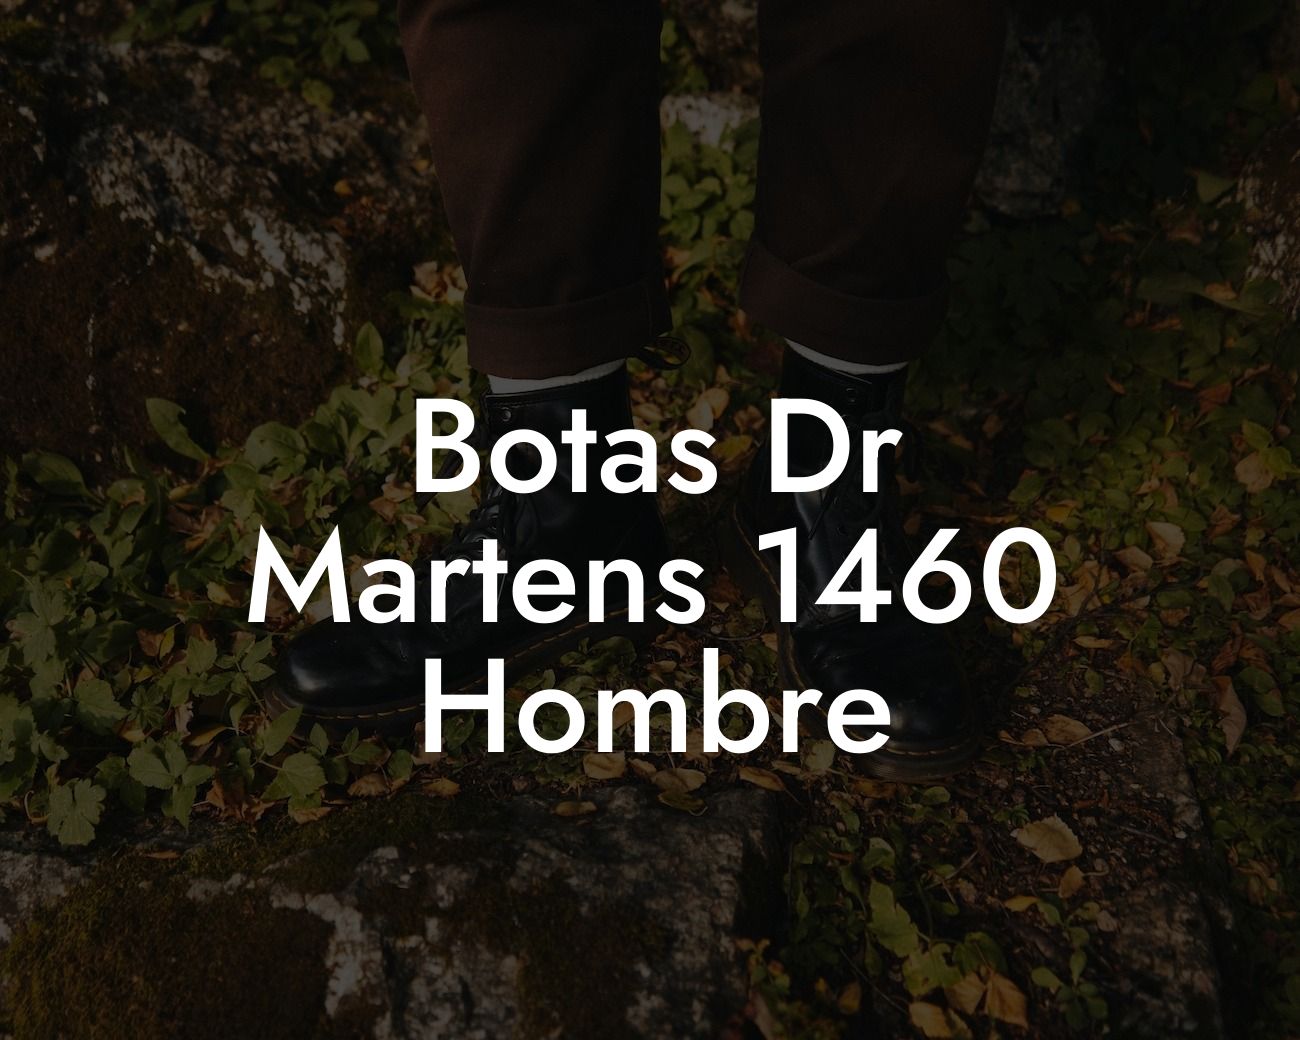 Botas Dr Martens 1460 Hombre